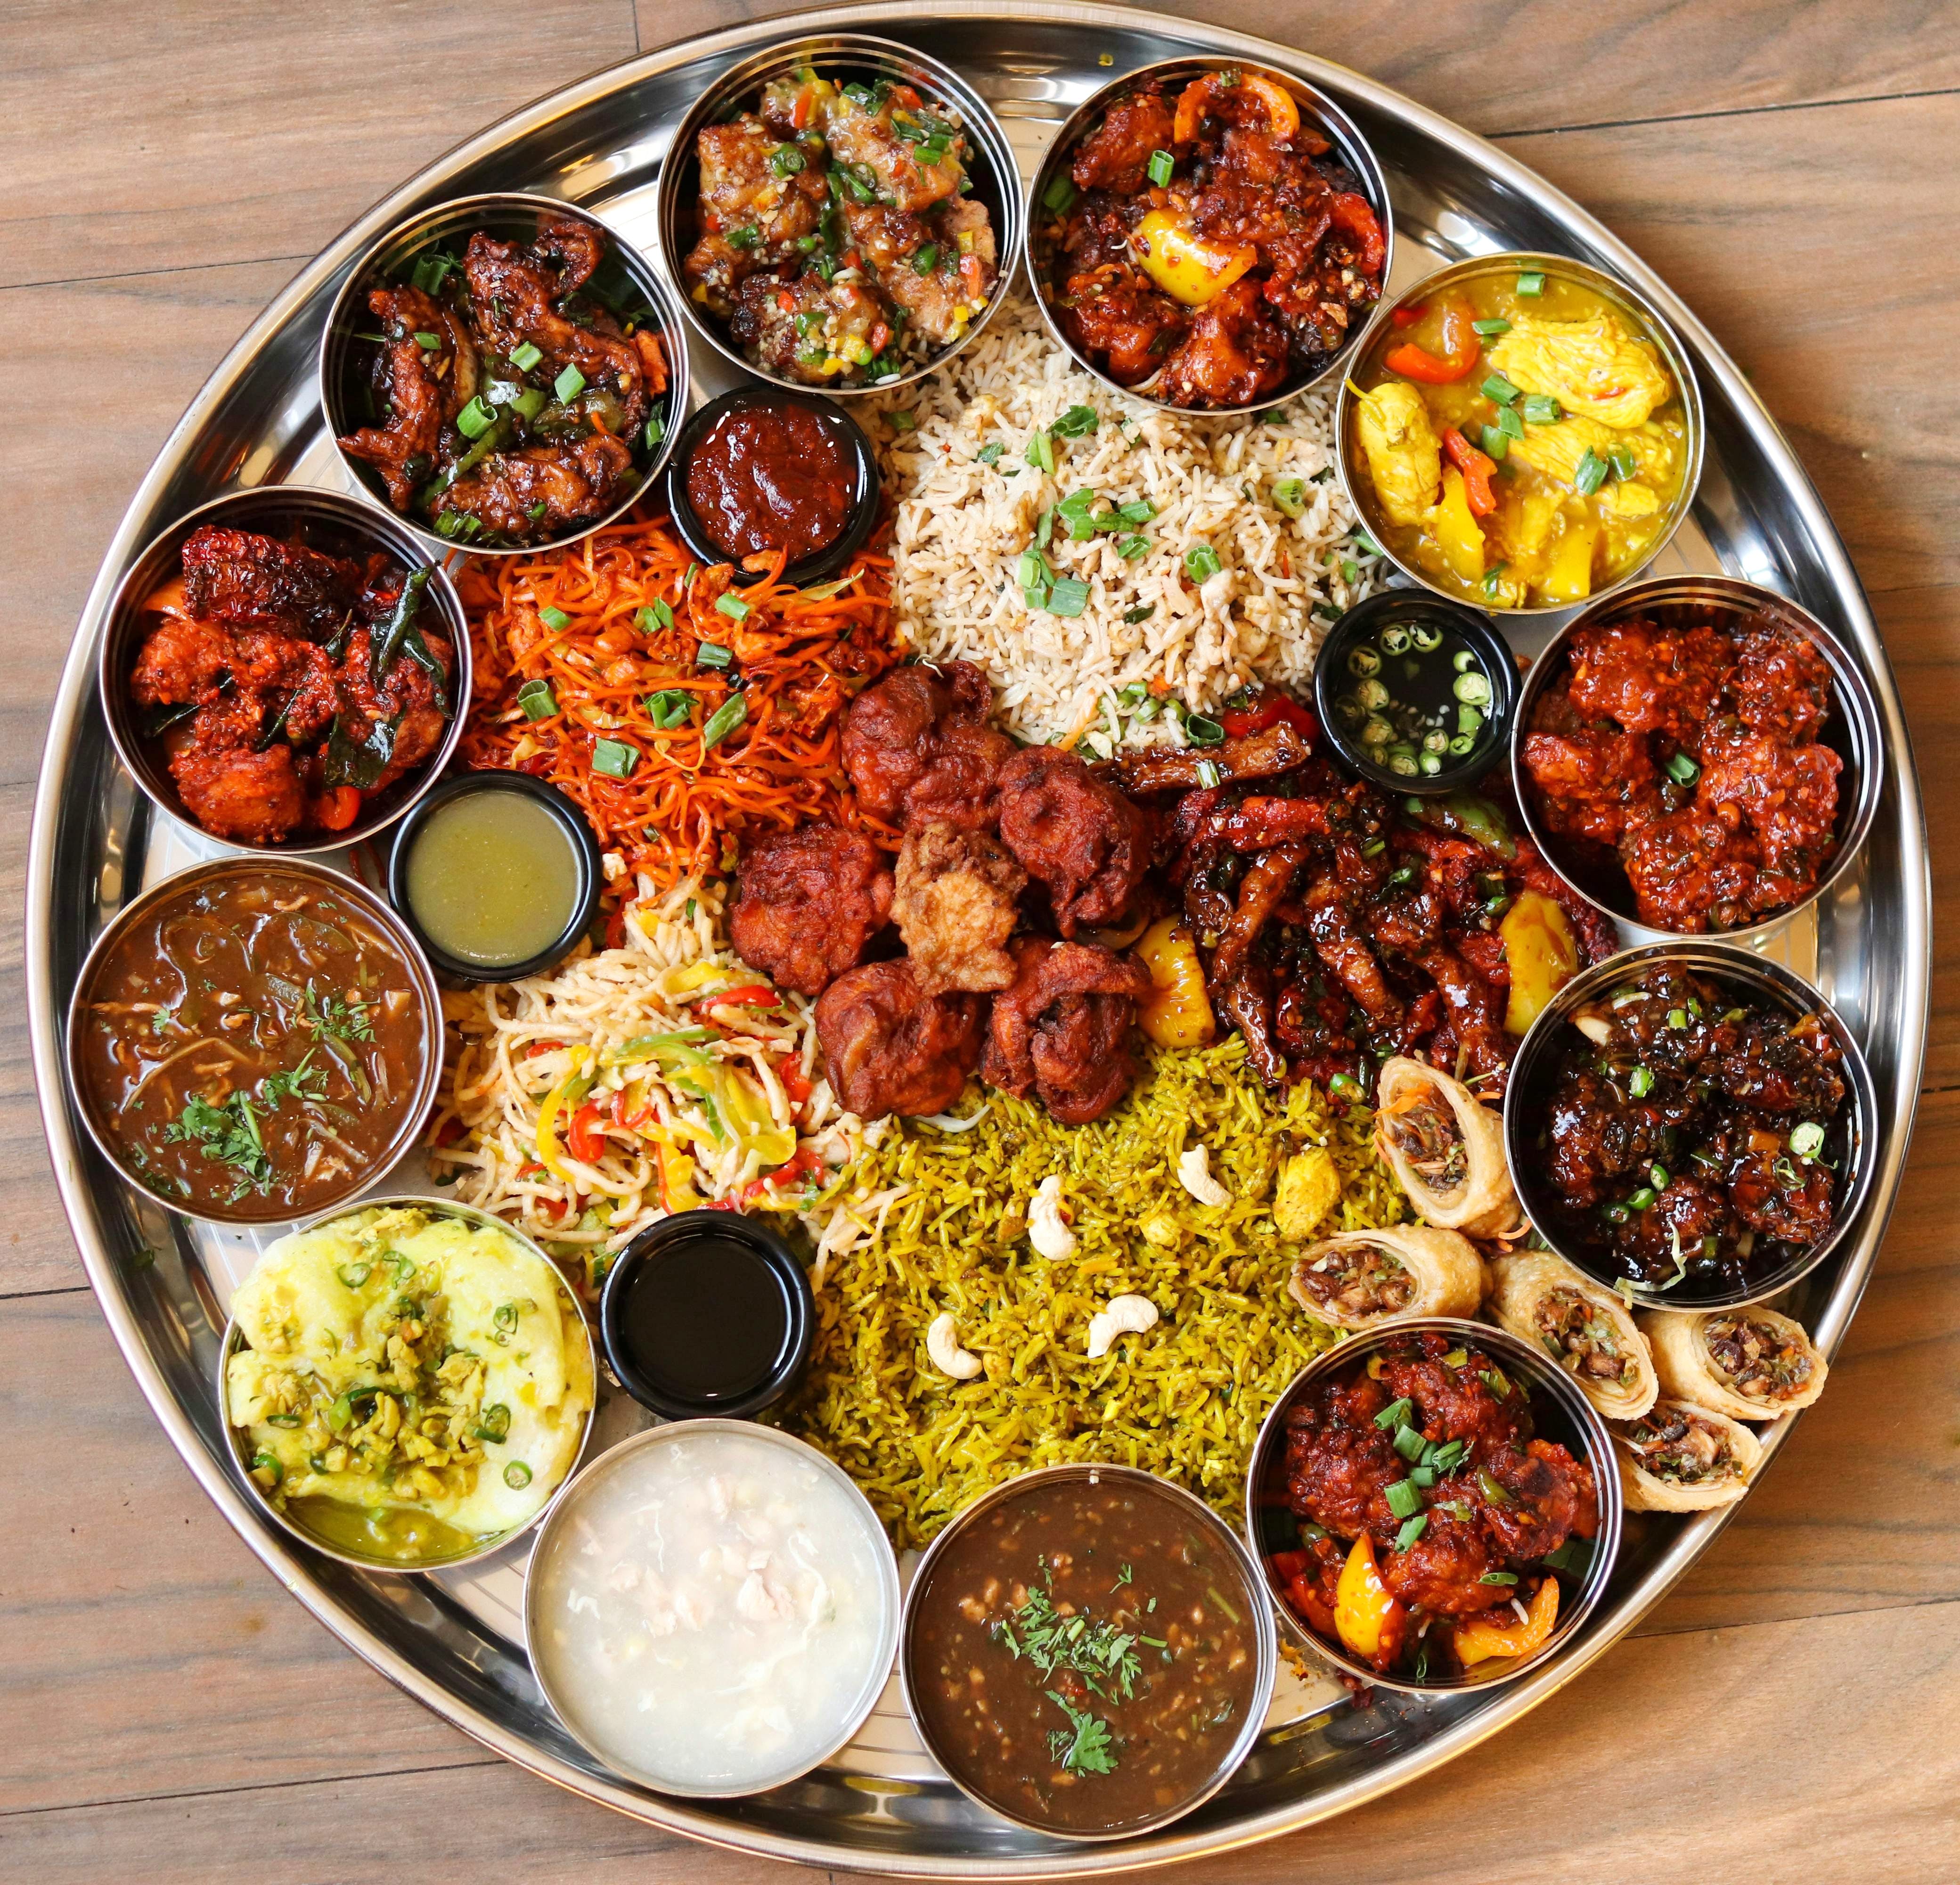 Dish,Food,Cuisine,Ingredient,Meal,Produce,Vegetarian food,Sindhi cuisine,Staple food,Indian cuisine